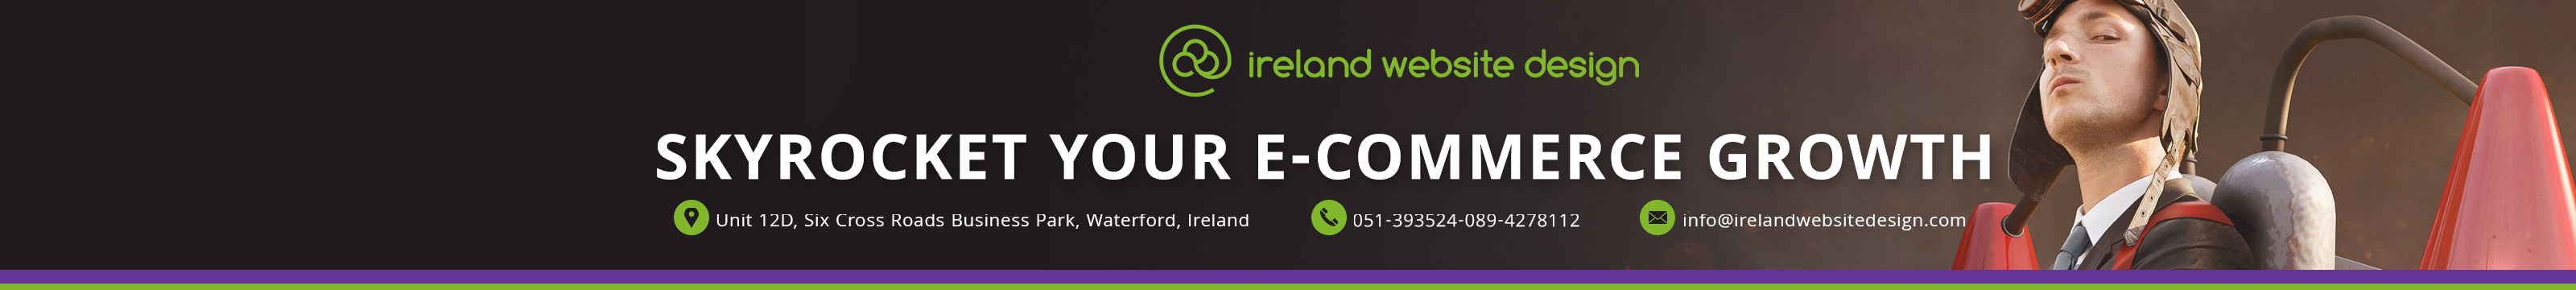 Ireland Website Design eCommerce's profile banner